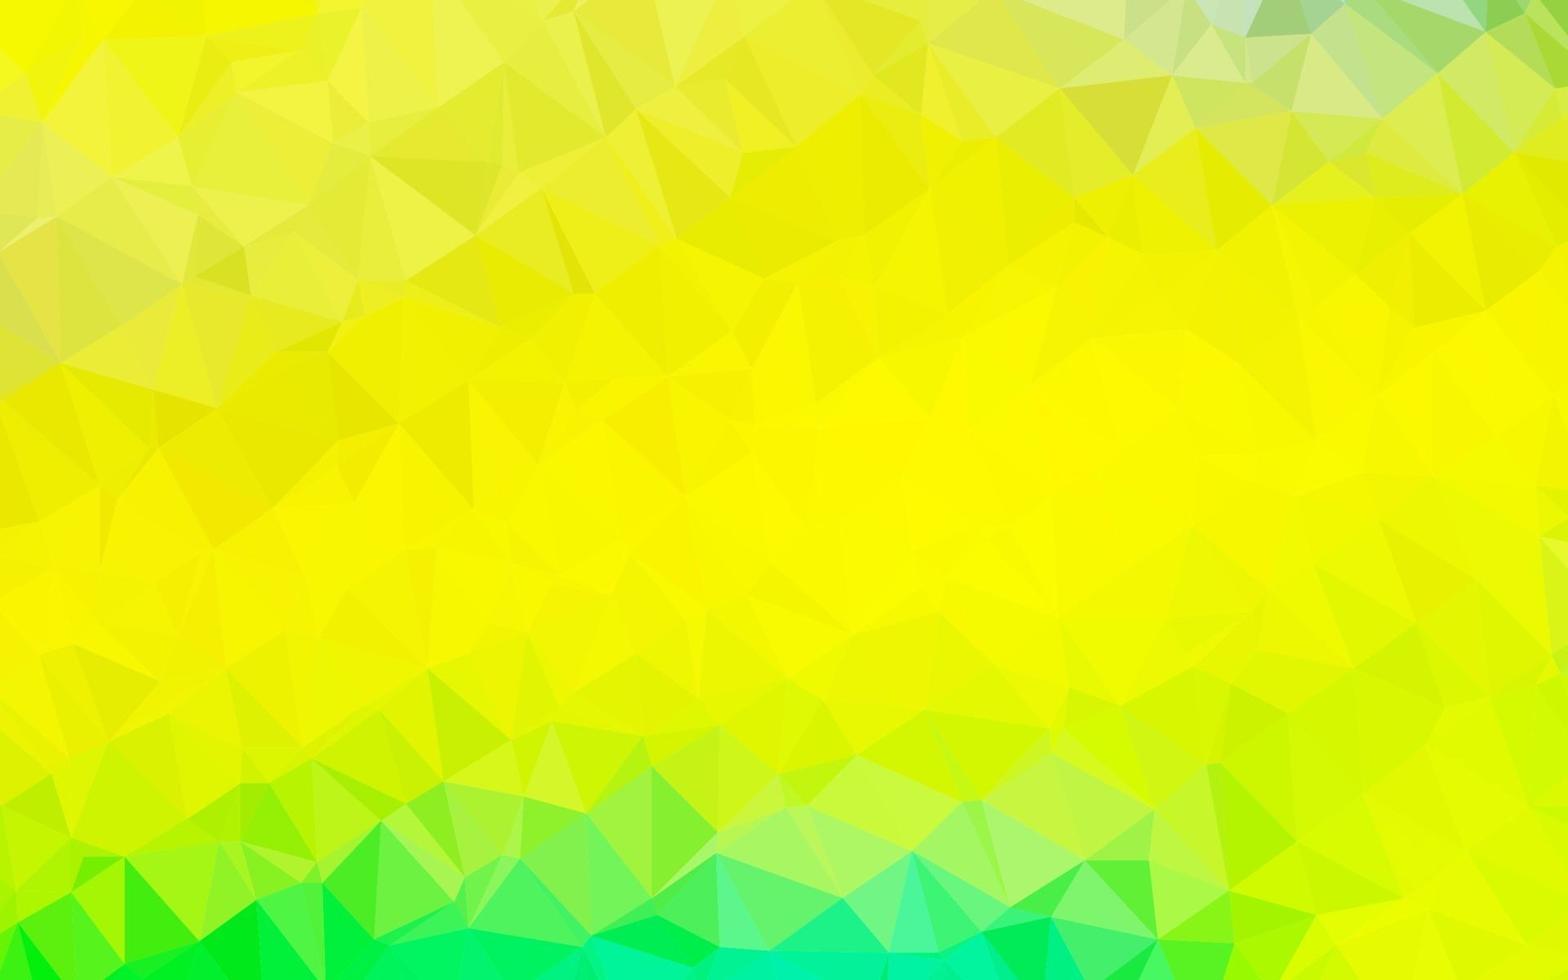 fond triangulaire brillant de vecteur vert clair et jaune.